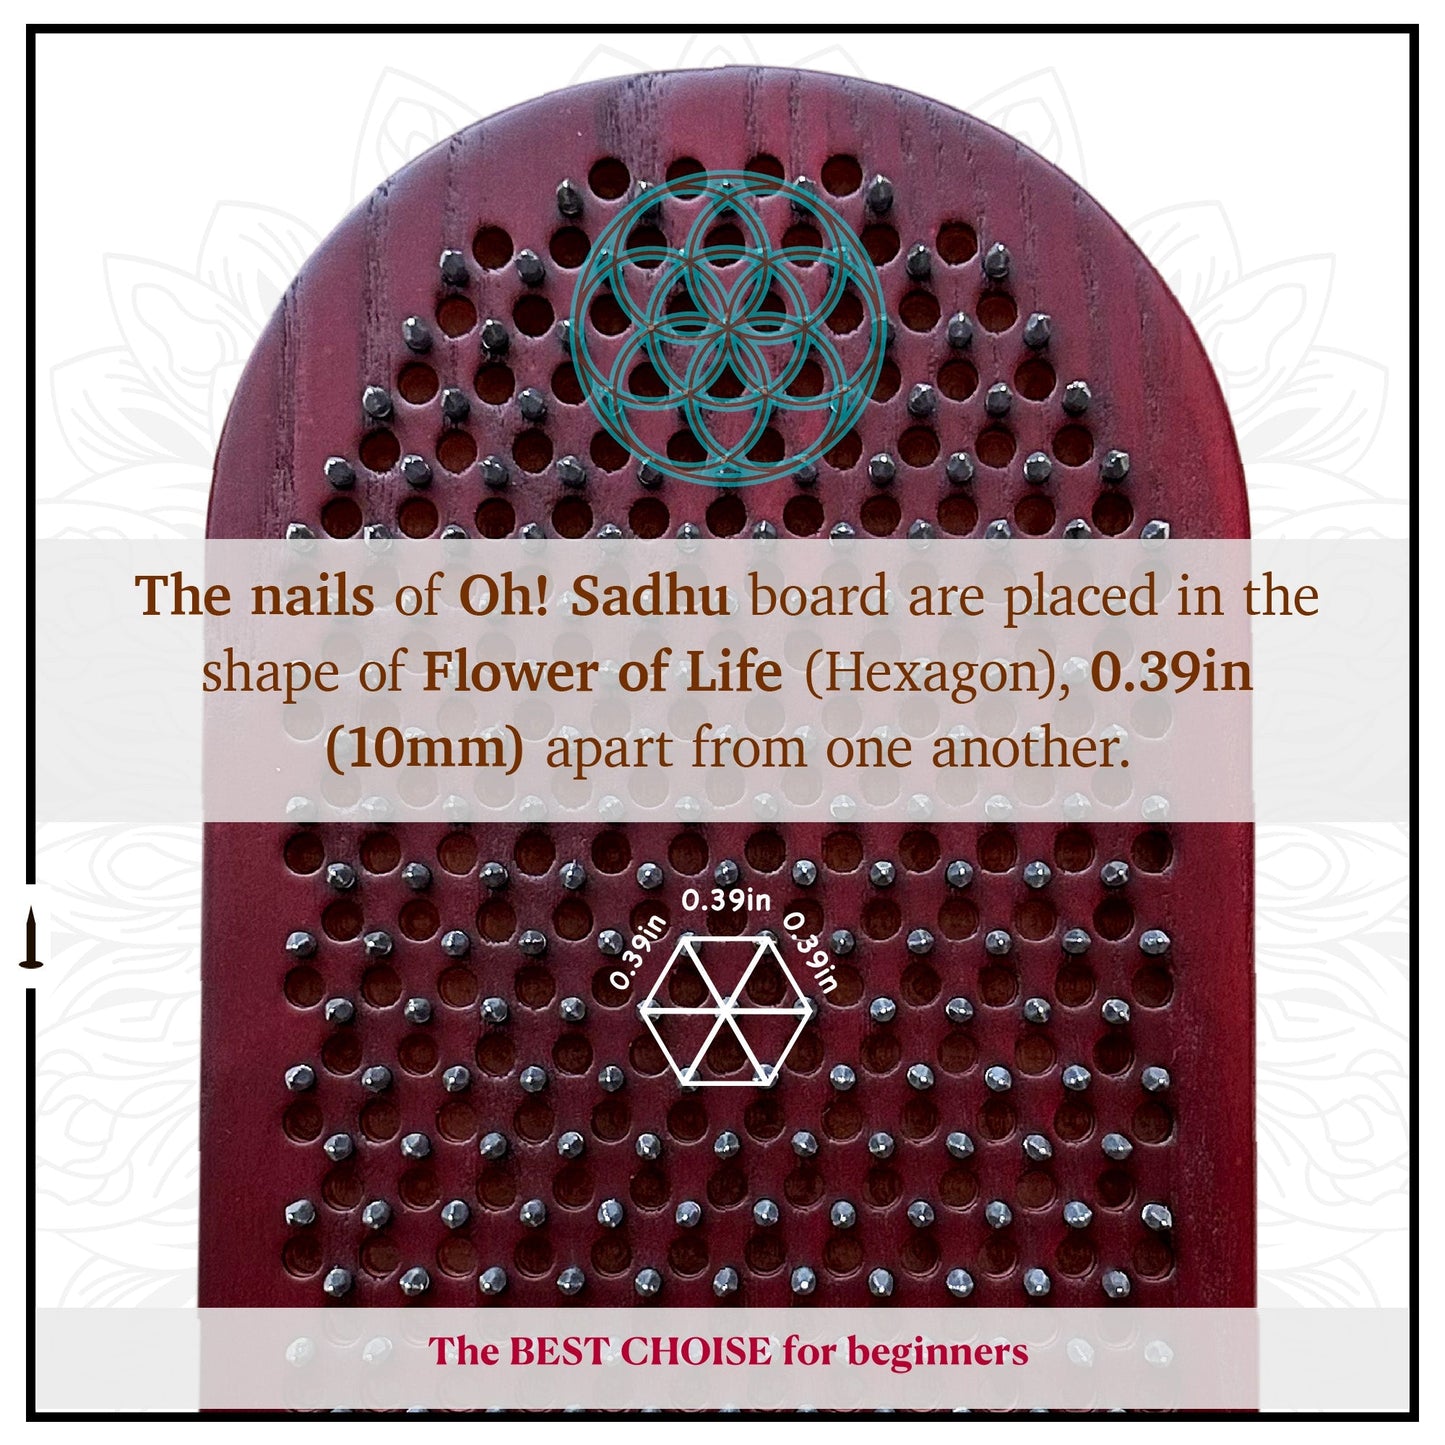 Sadhu board nails in shape flower of life